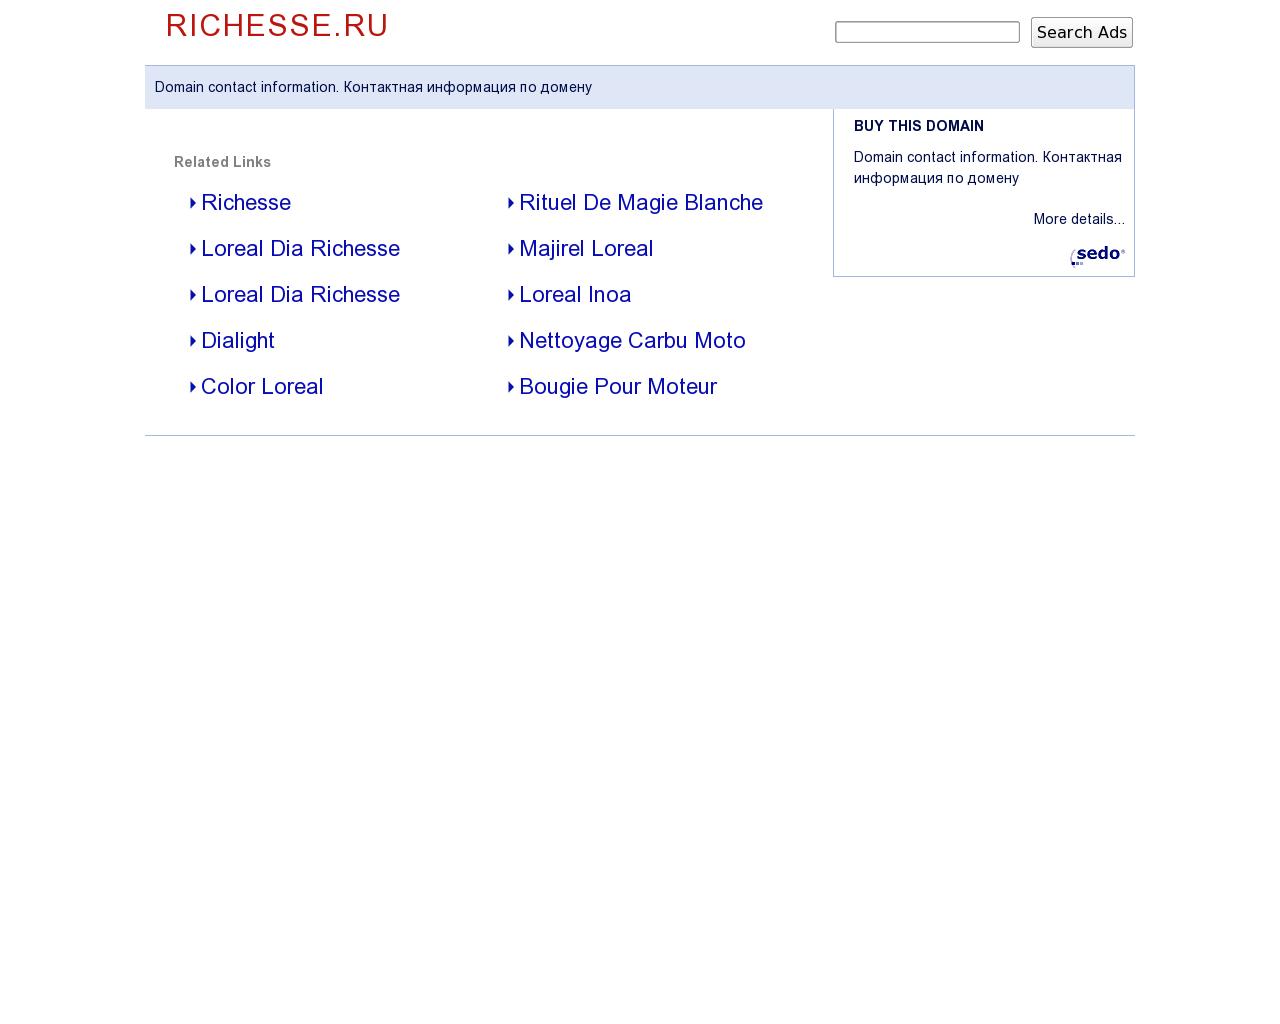 Изображение сайта richesse.ru в разрешении 1280x1024